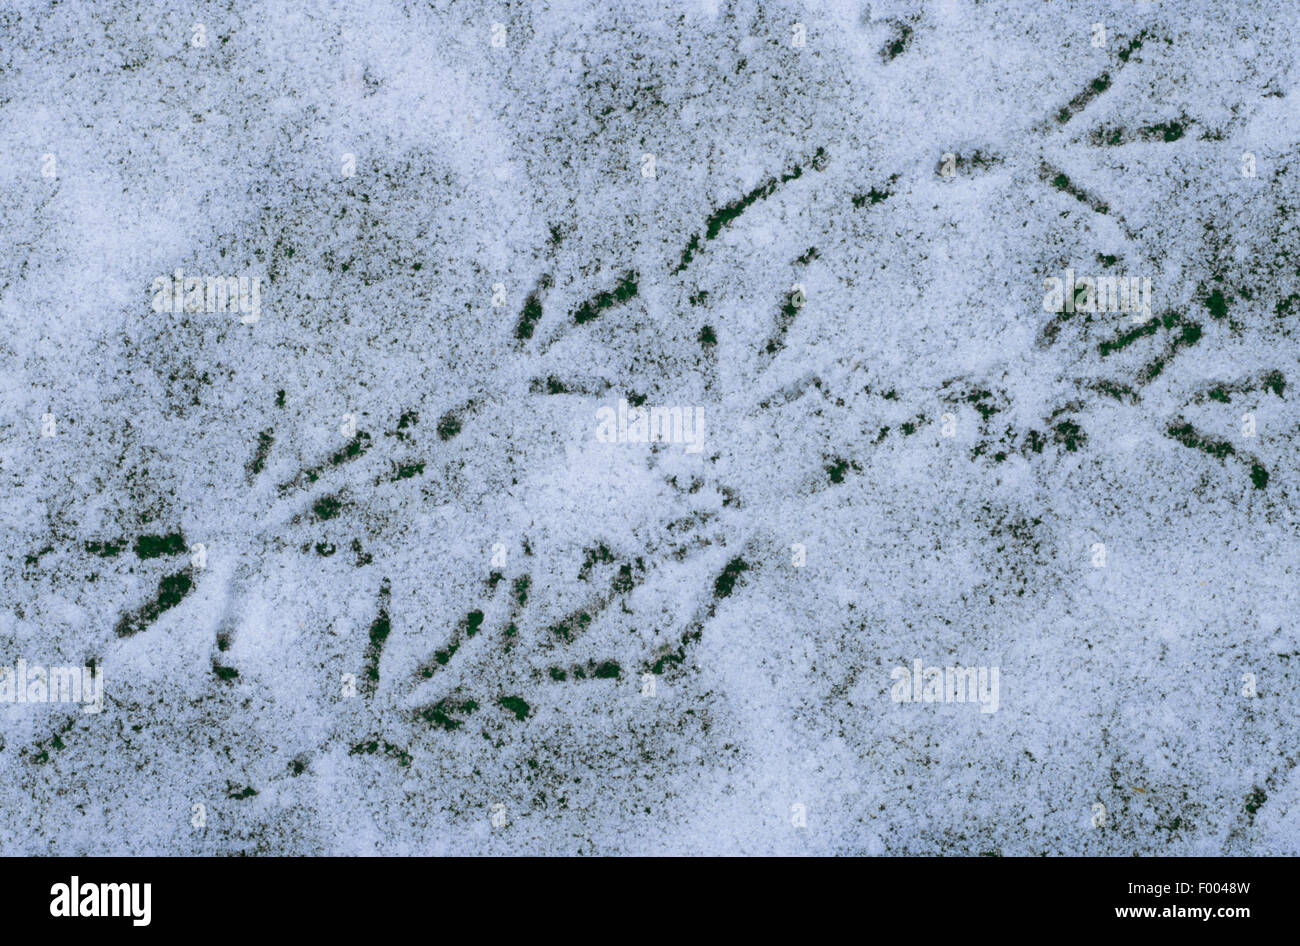 Merlo (Turdus merula), impronte di un merlo nella neve, Germania Foto Stock